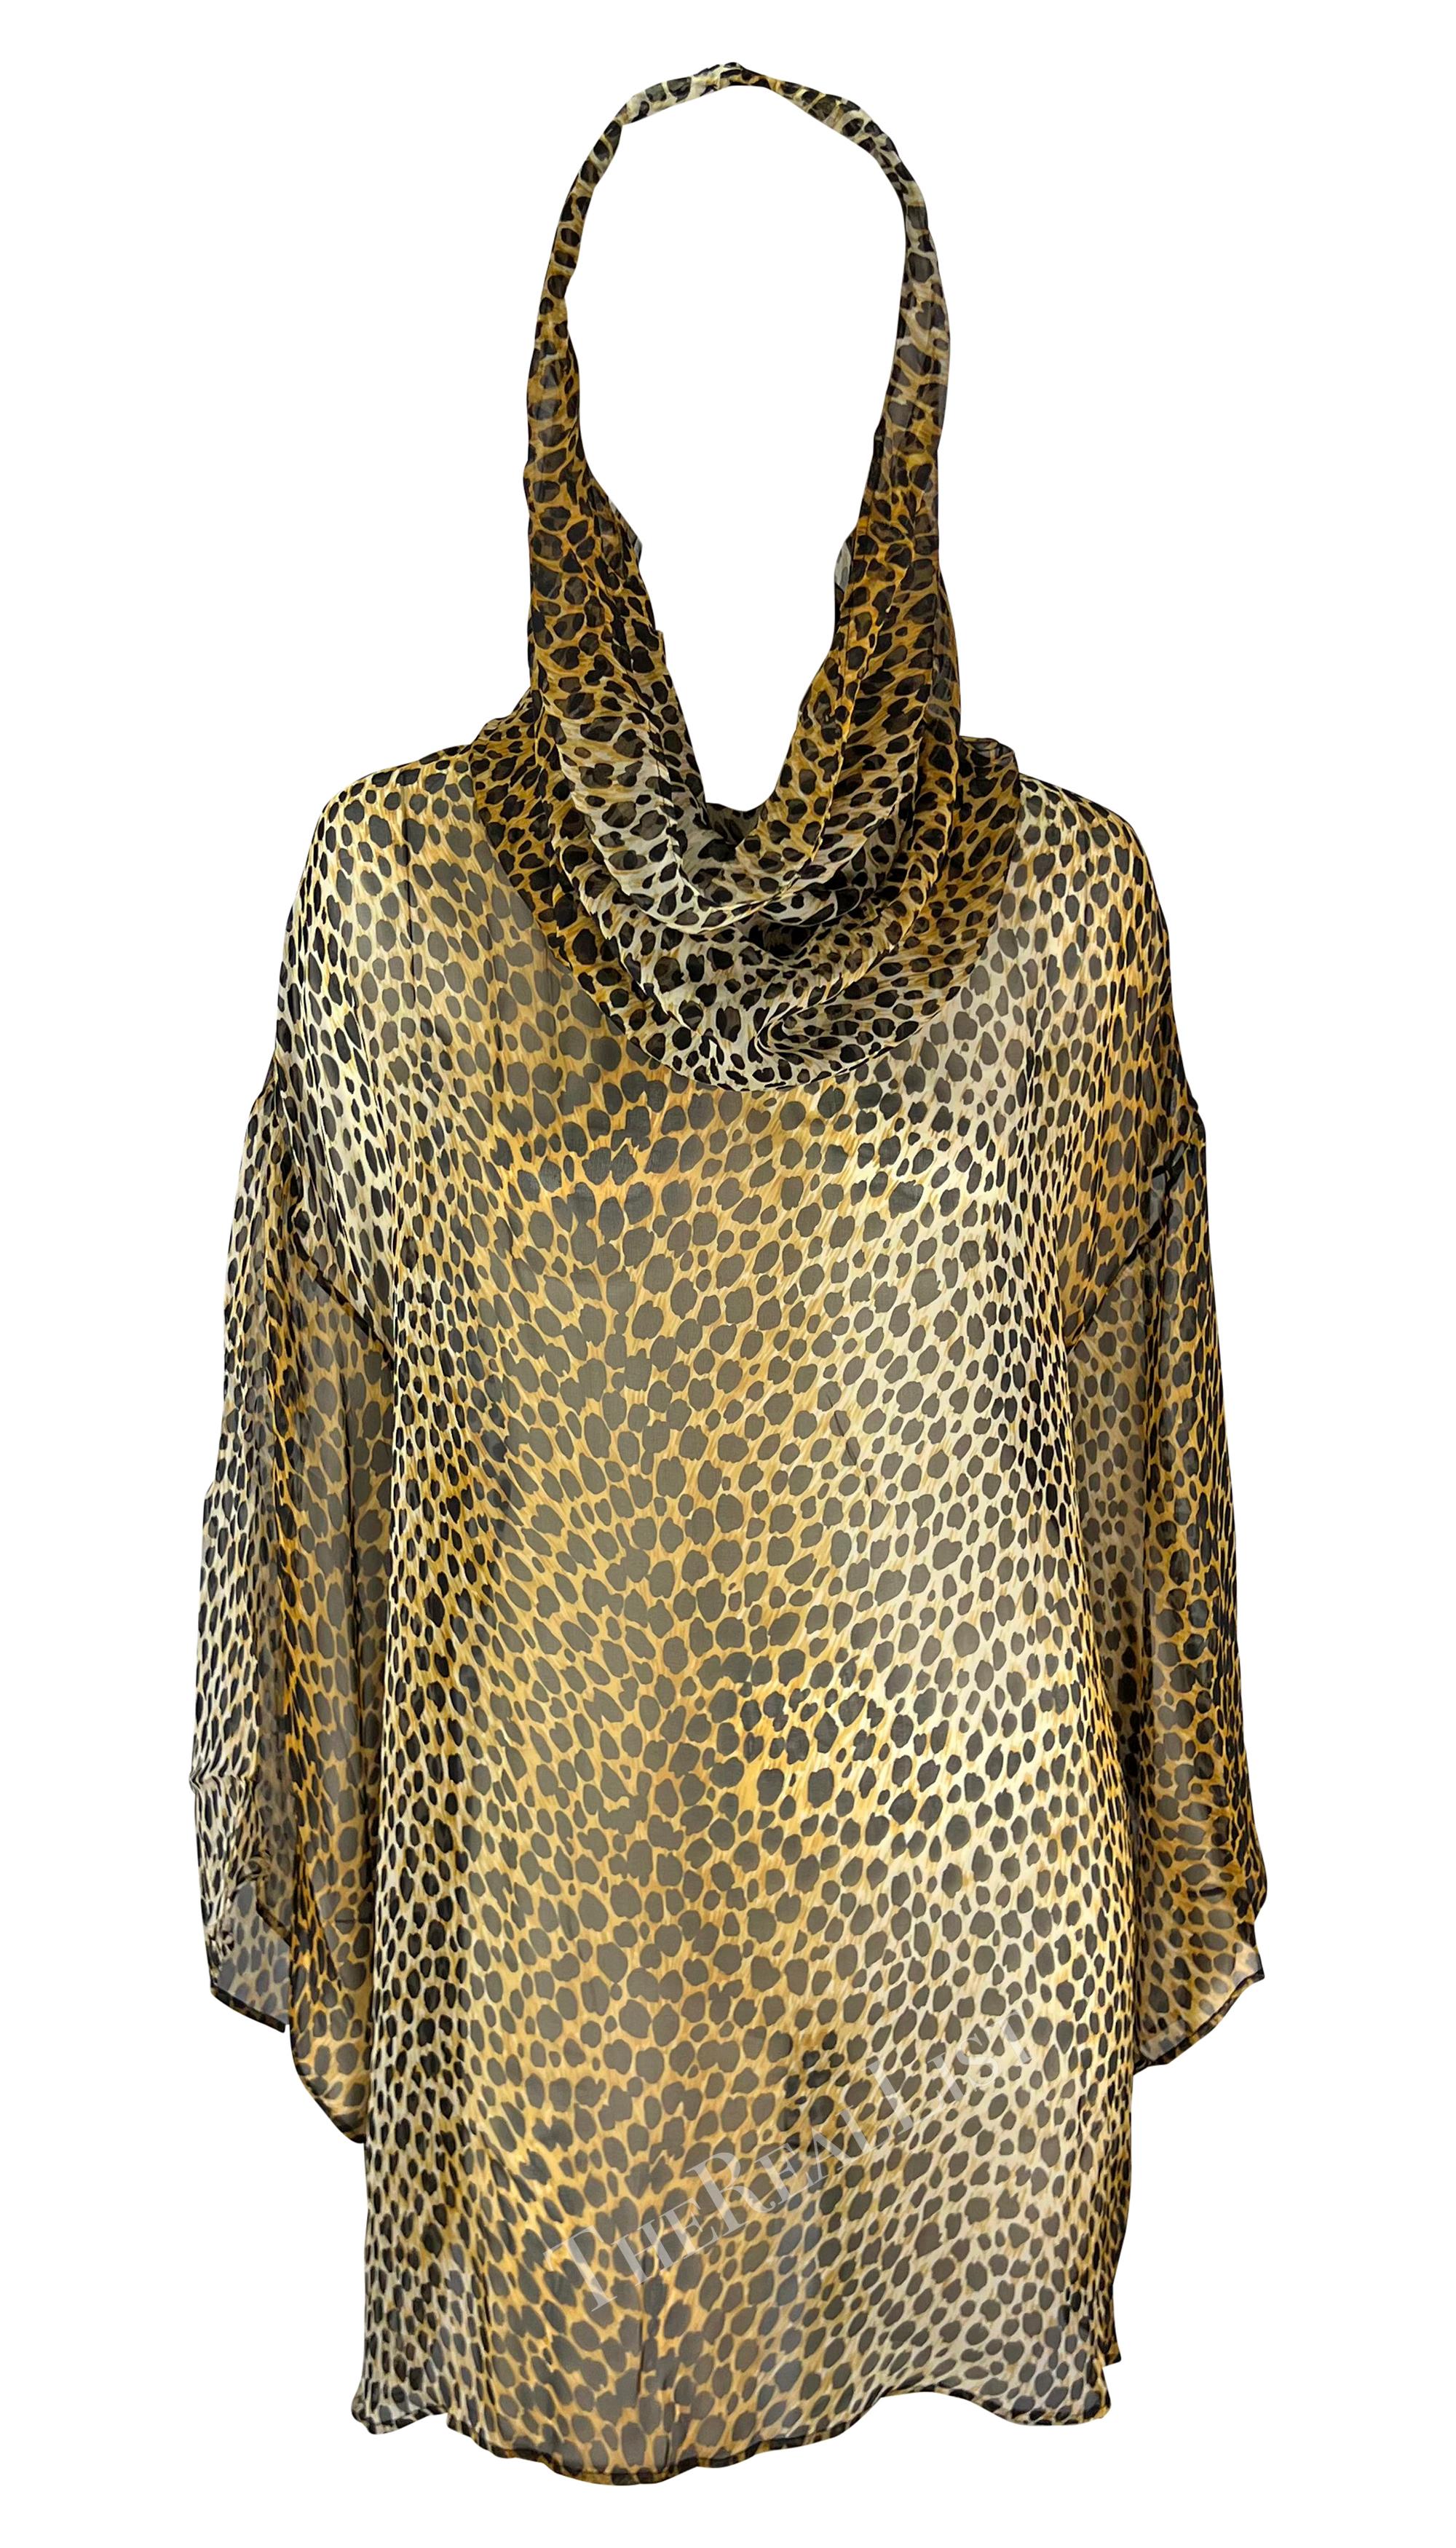 S/S 1996 Dolce & Gabbana Runway Cheetah Print Sheer Silk Hooded Poncho Tunic 6